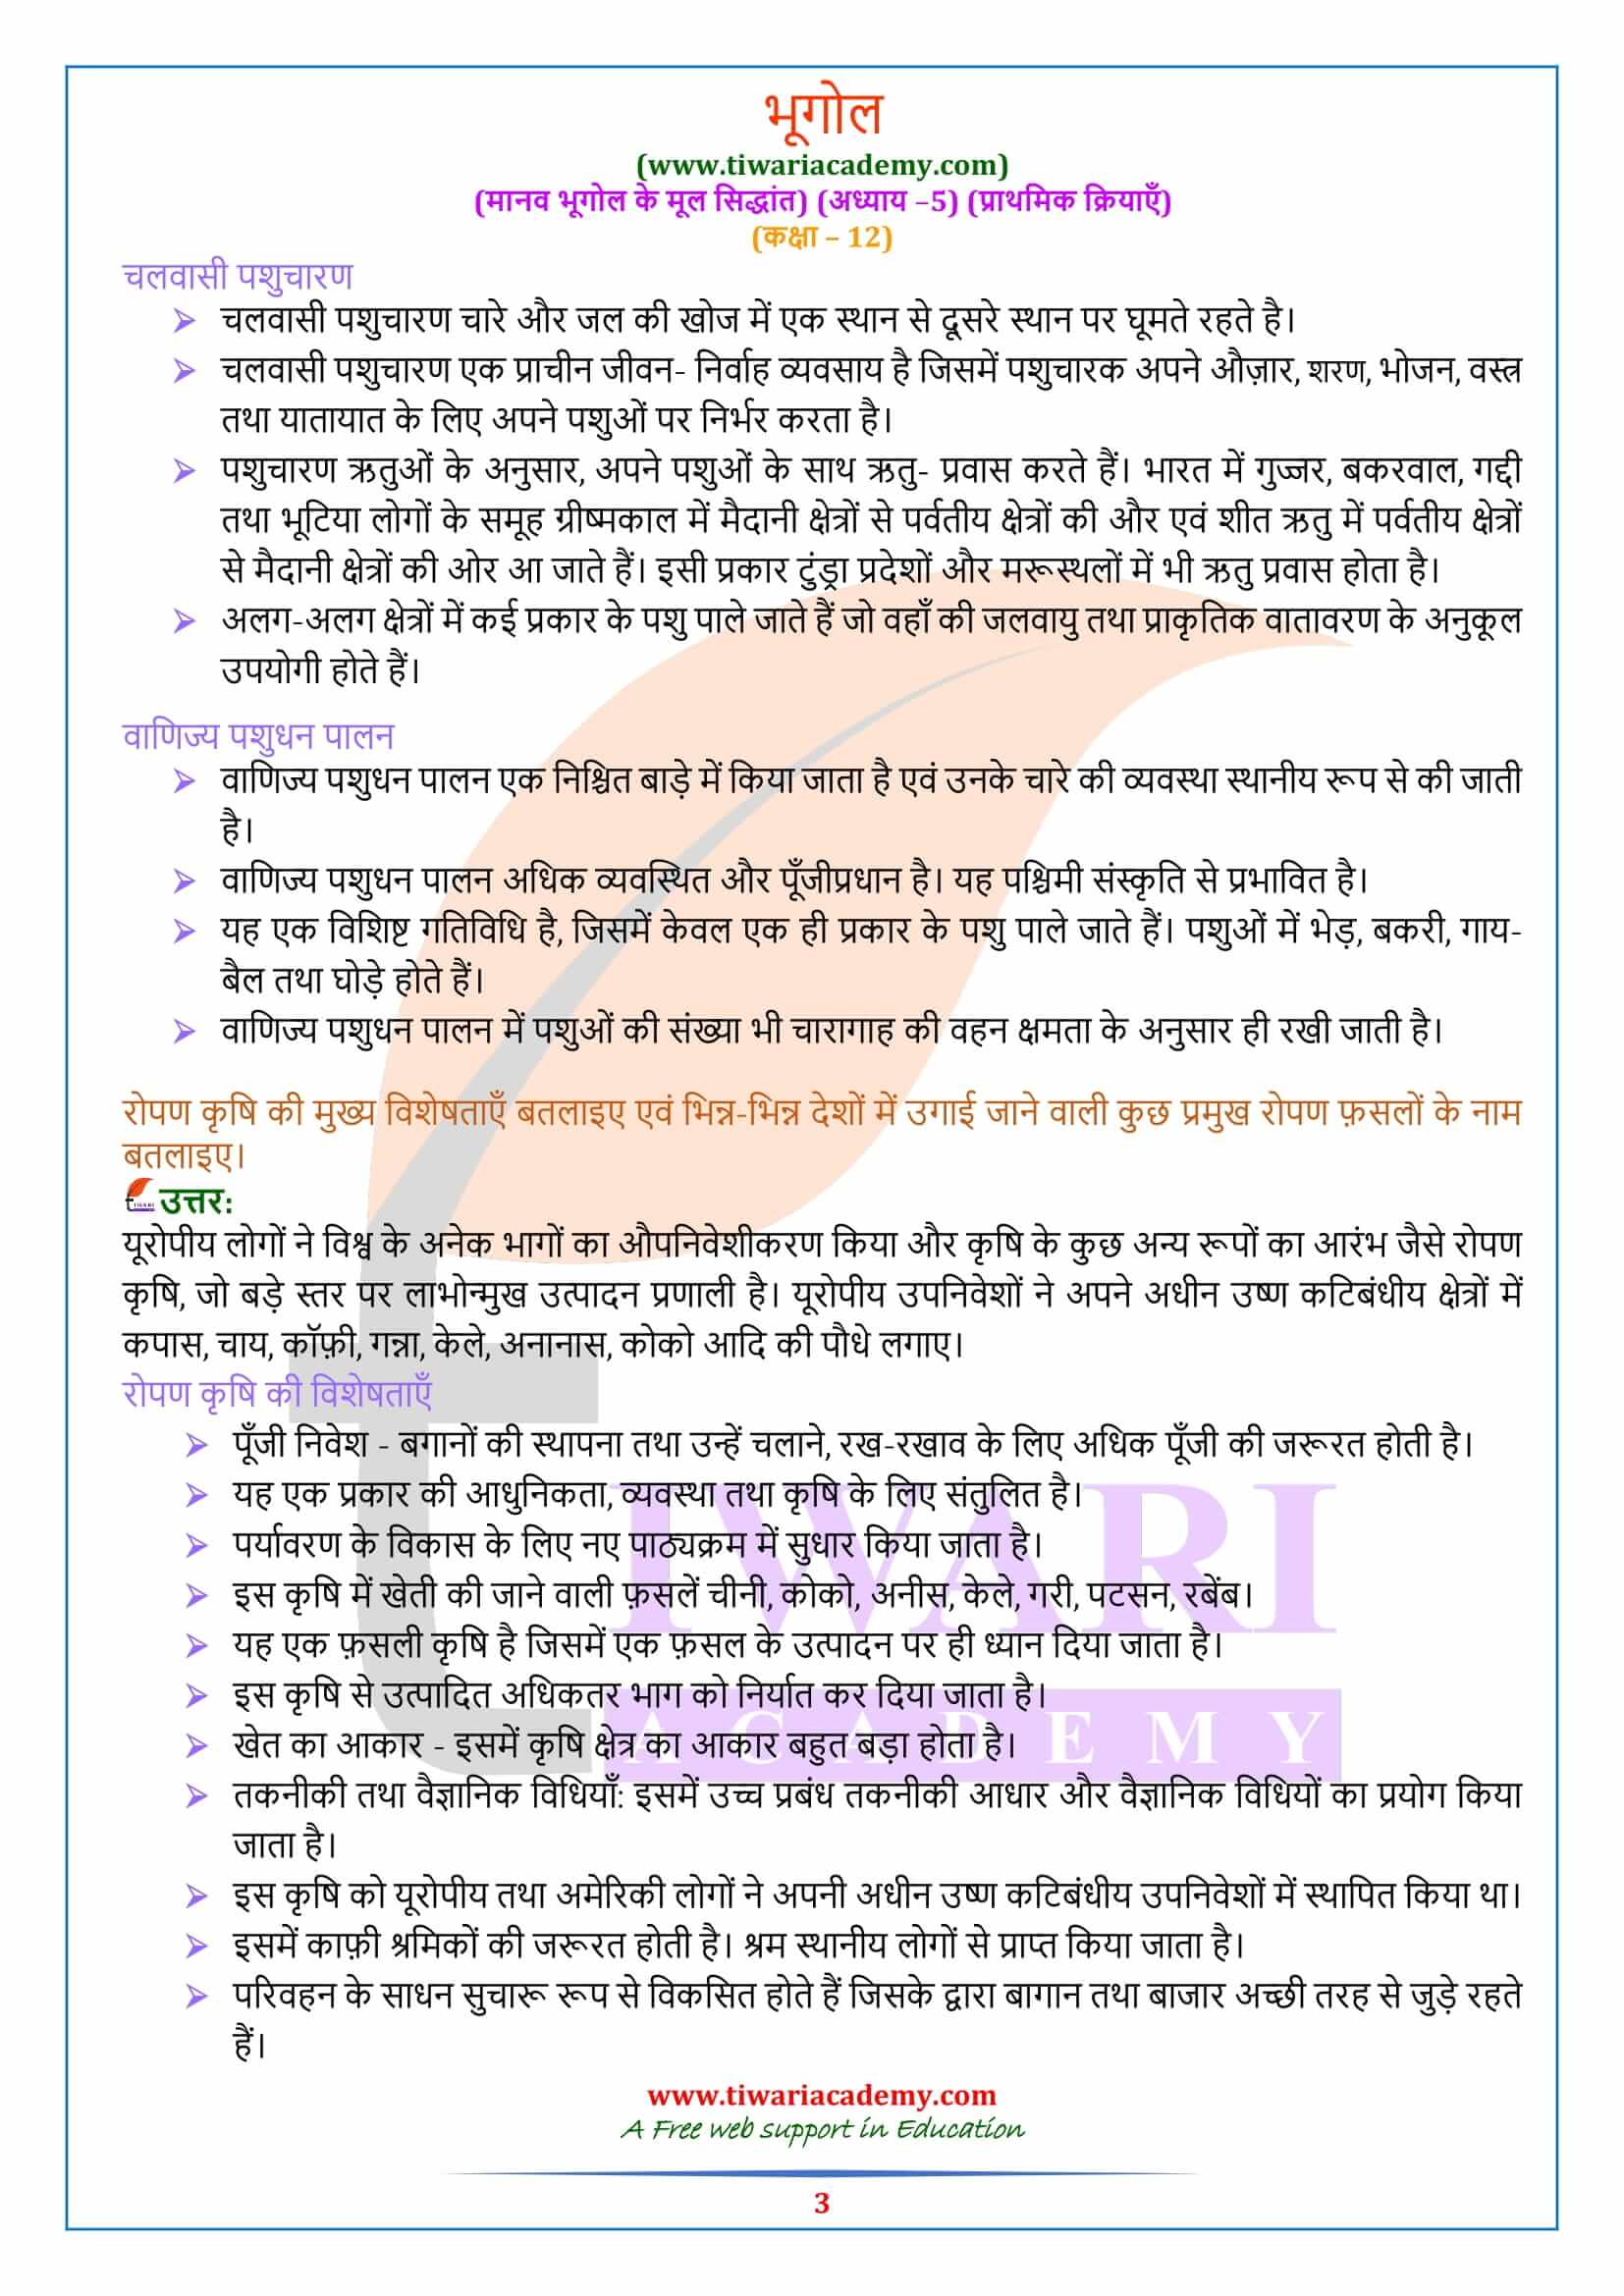 एनसीईआरटी समाधान कक्षा 12 भूगोल अध्याय 5 हिंदी में